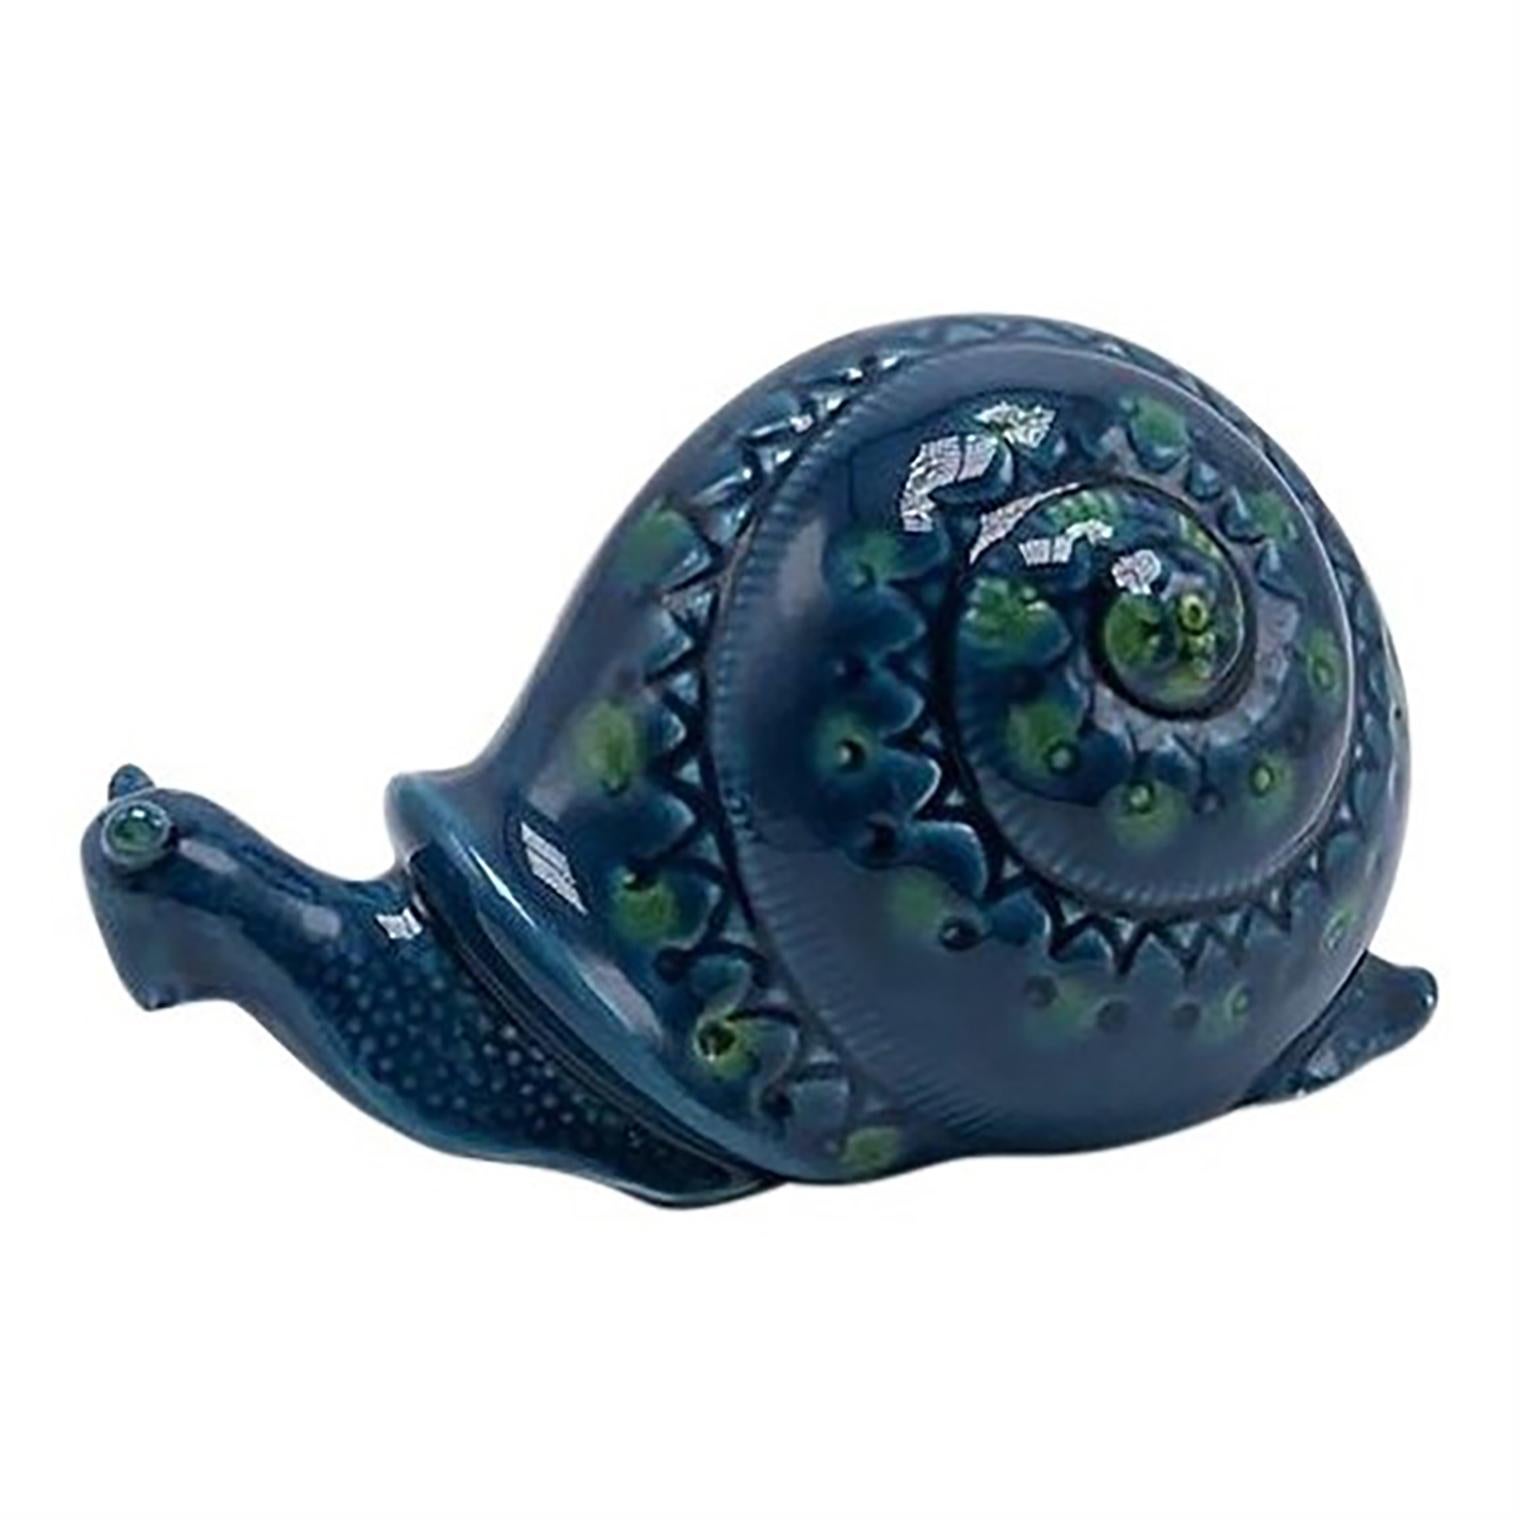 Blue Ceramic Snail in the Style of Bitossi, circa 1960